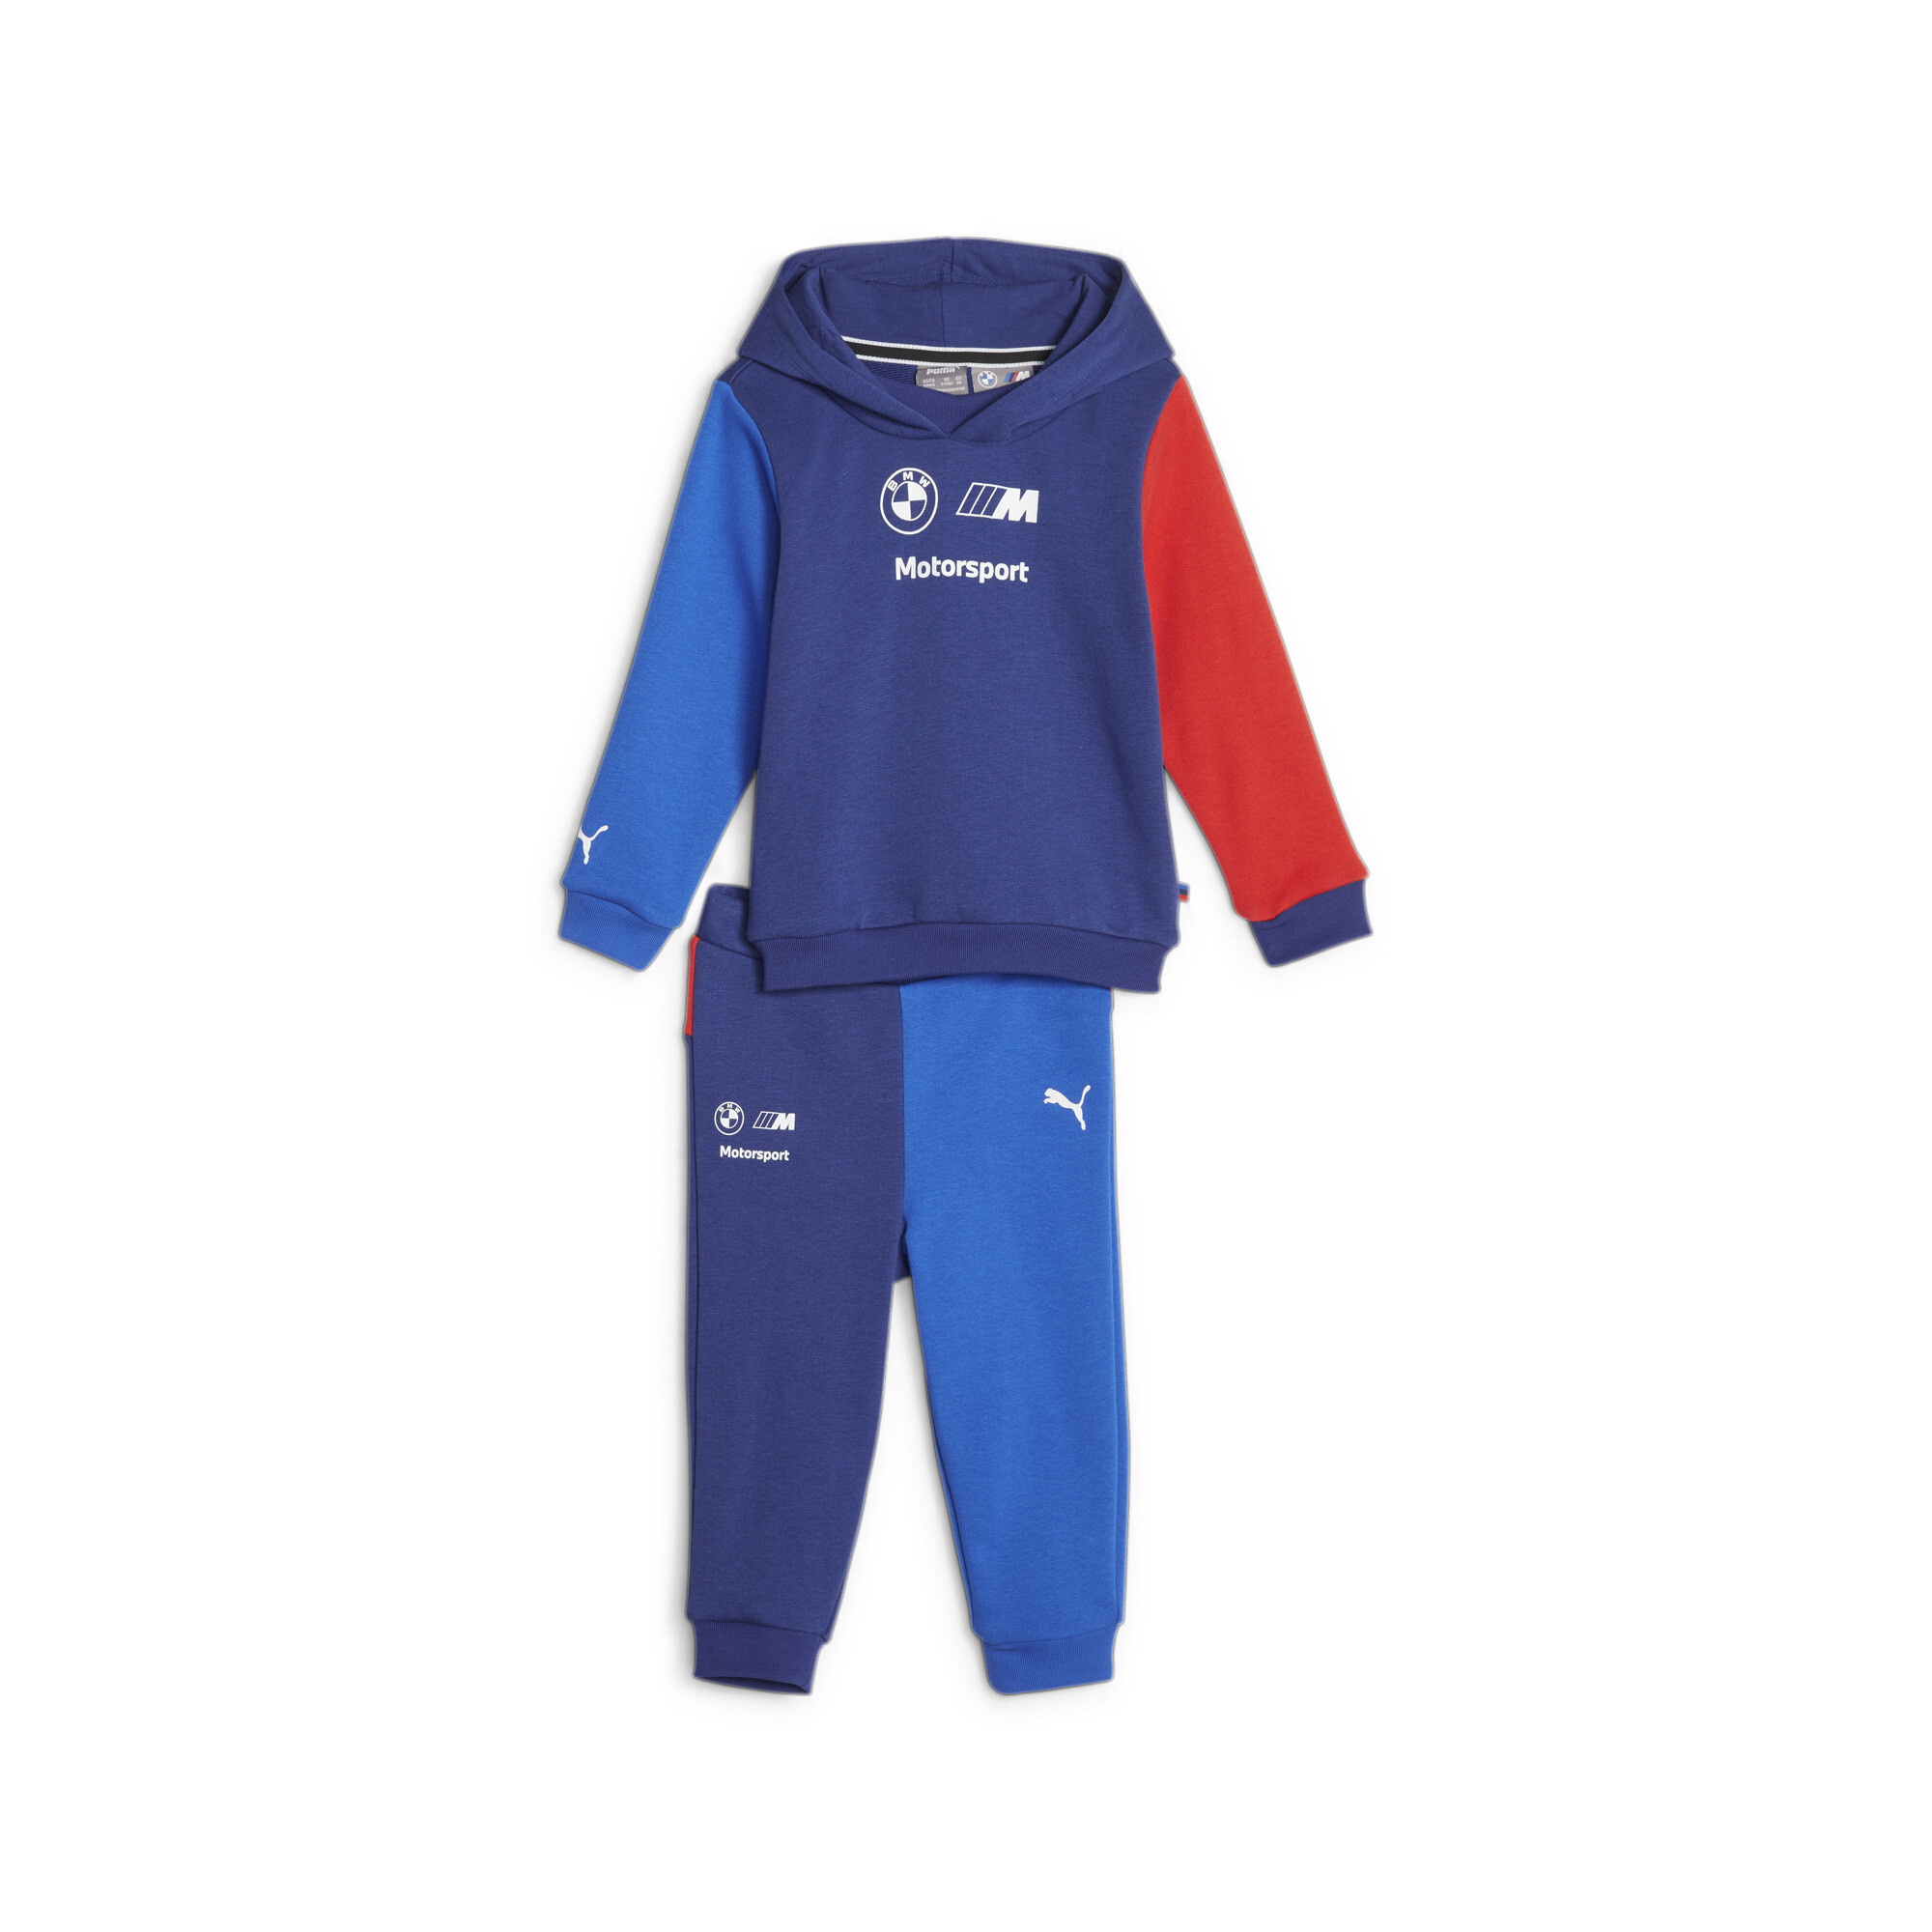 Puma BMW M Motorsport Kids' Motorsport Jogger Suit, Blue, Size 2-4M, Clothing